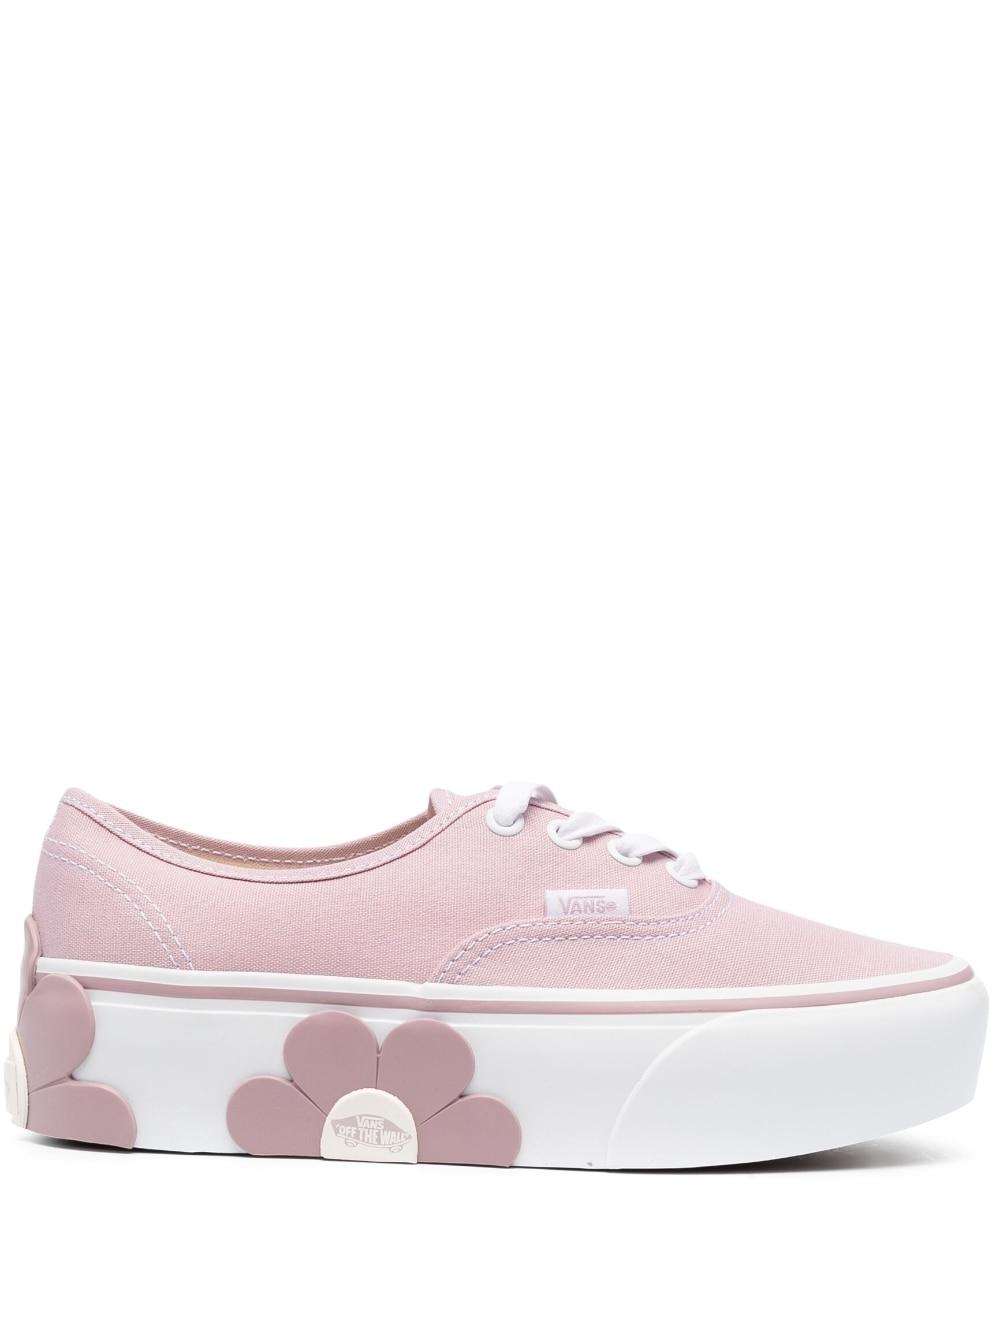 vans flower appliqué platform sneakers in pink lyst uk